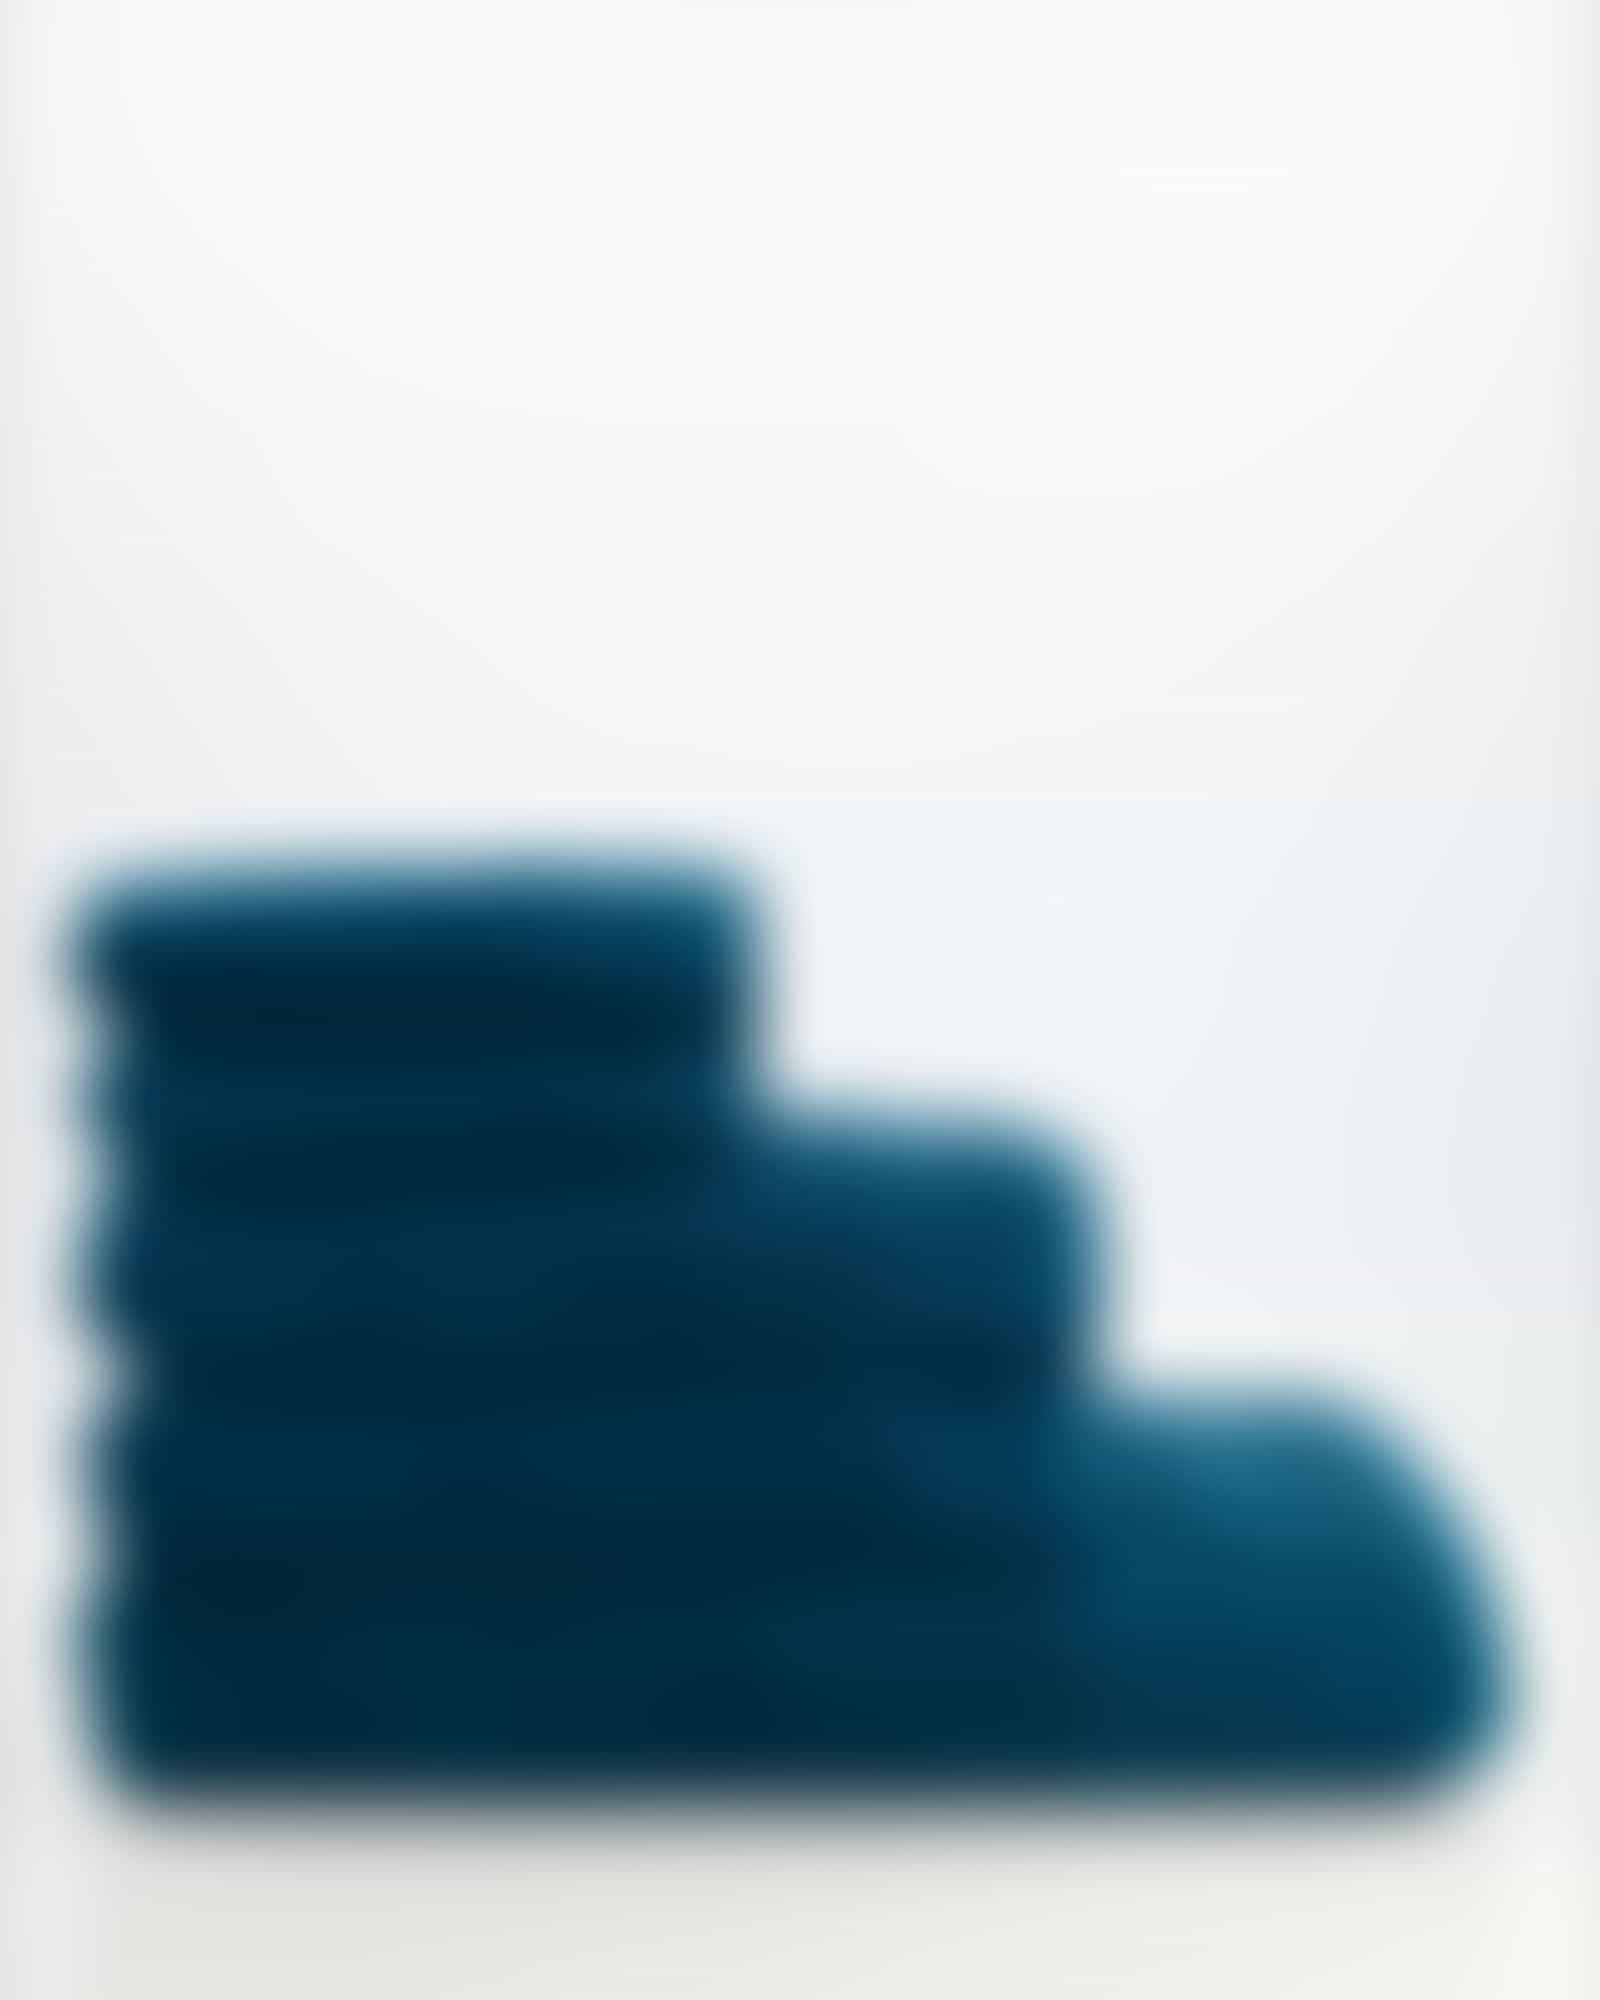 Vossen Handtücher Calypso Feeling - Farbe: poseidon - 5895 - Badetuch 100x150 cm